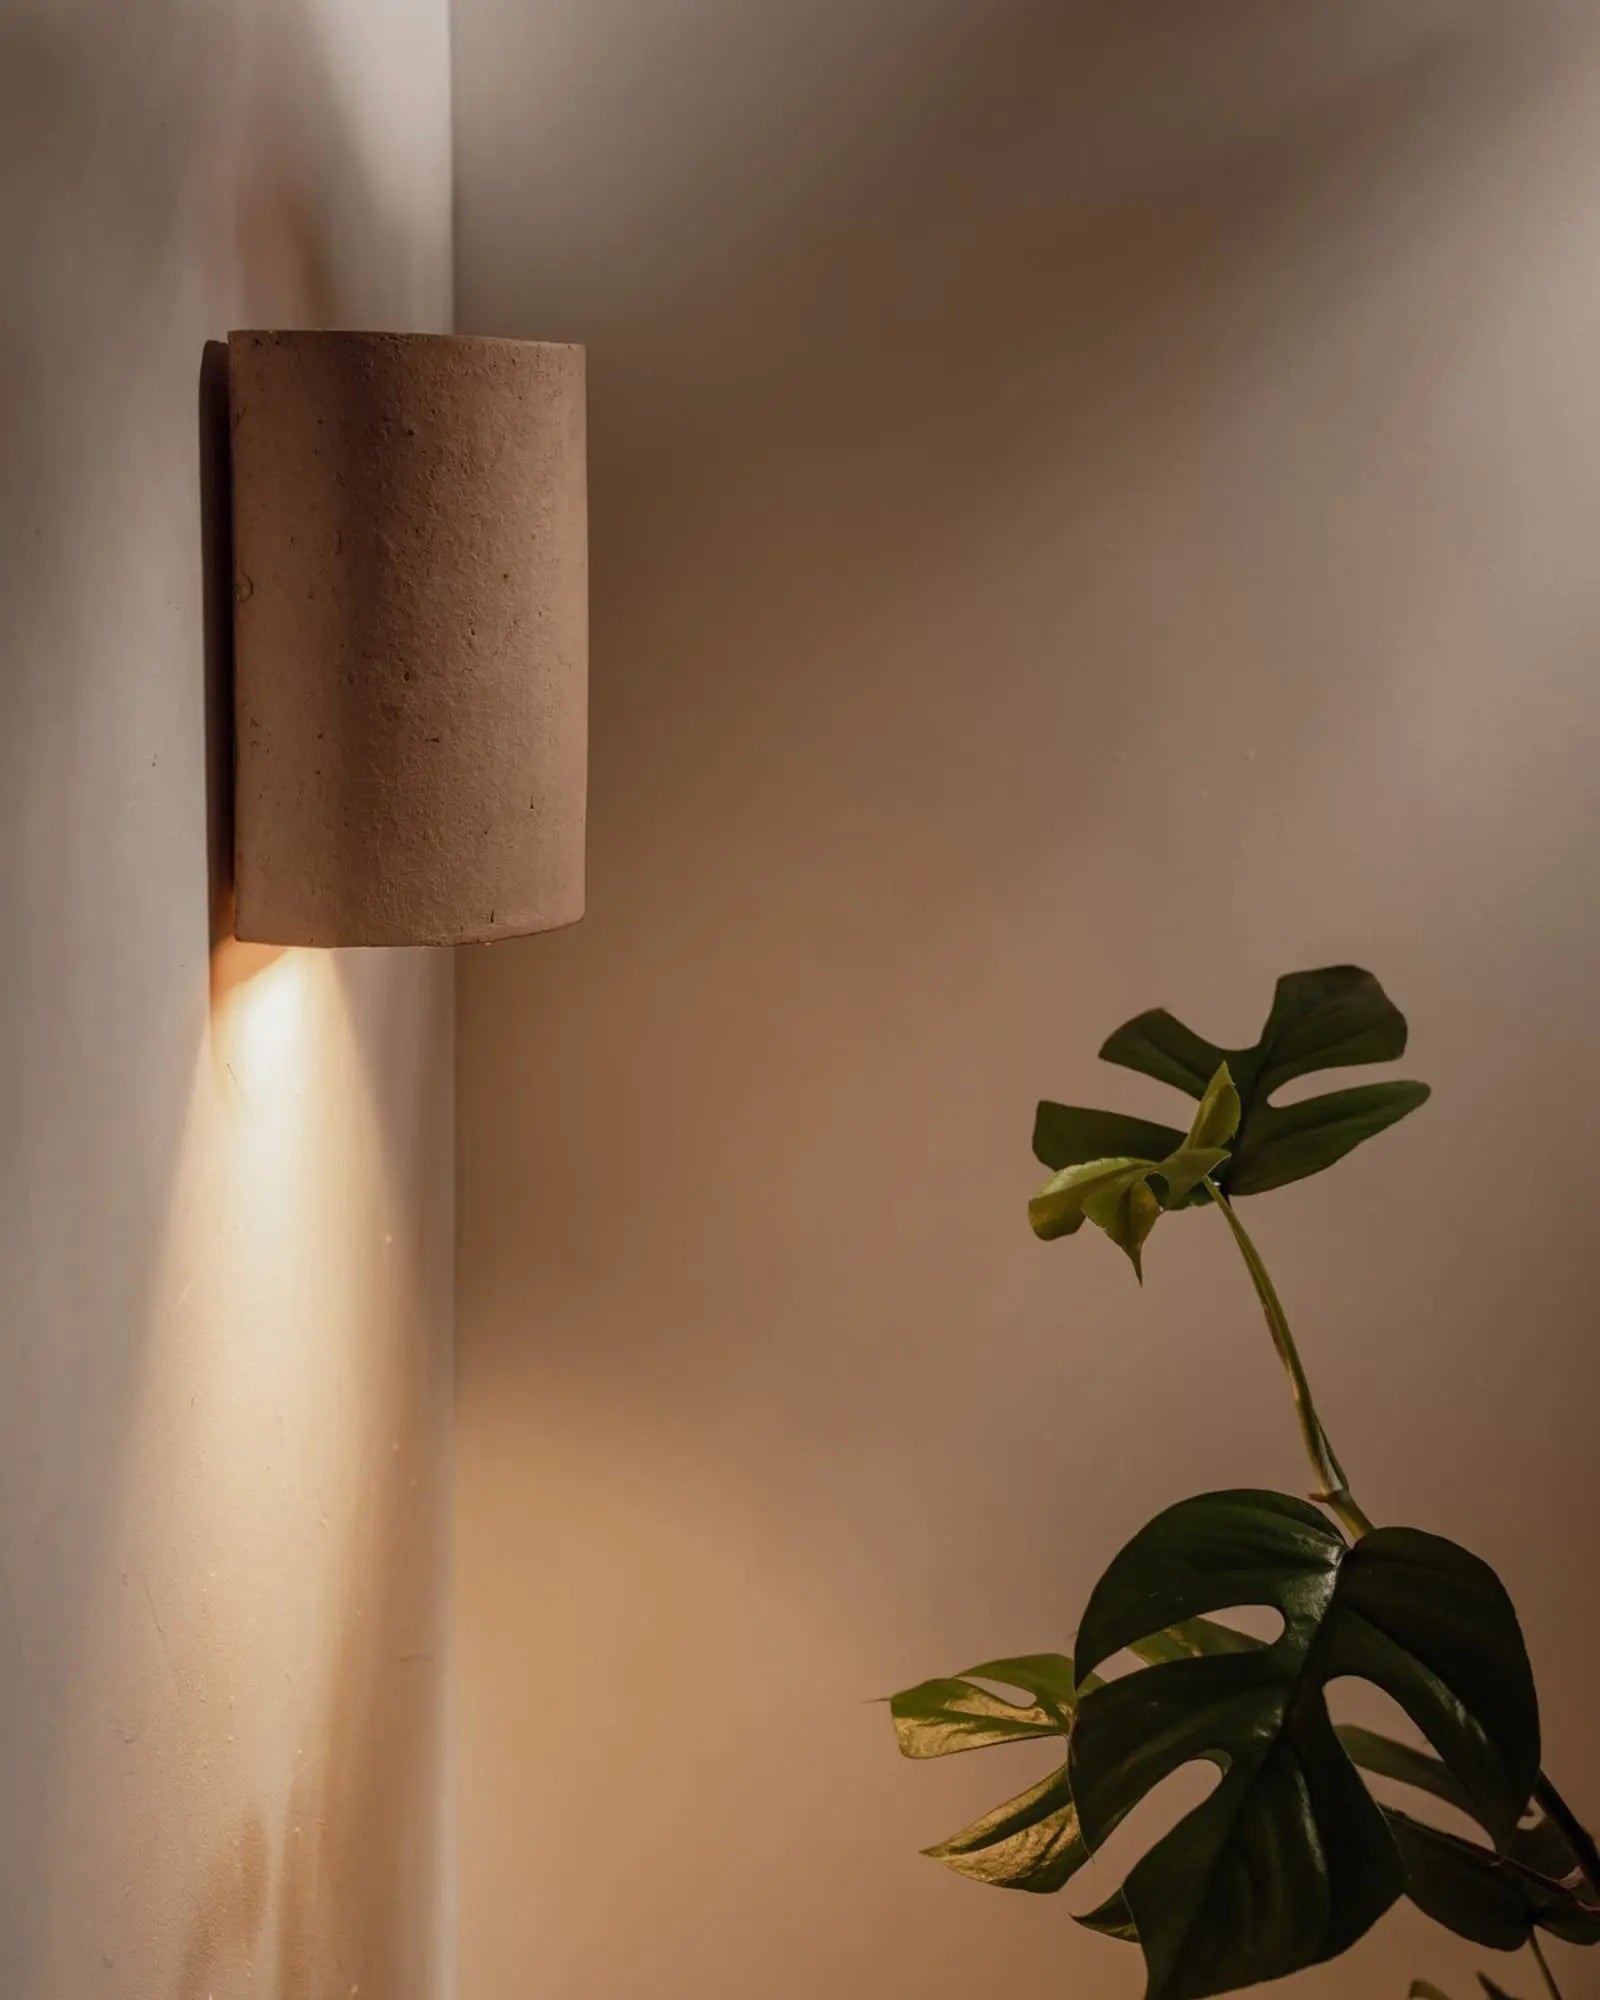 Nudie handmade ceramic wall light above a plant